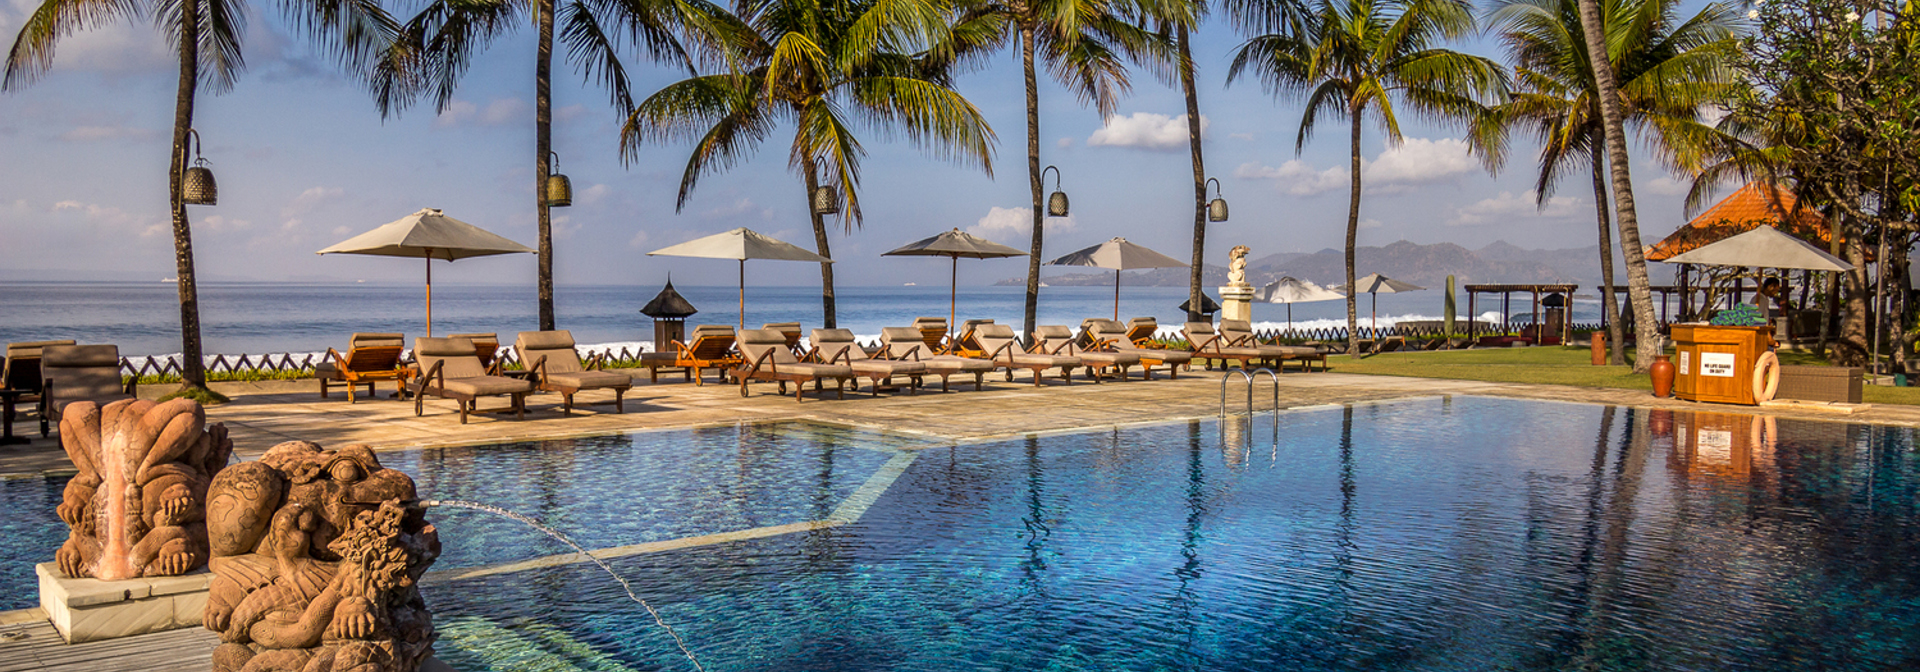 bali - candi dasa - rama candidasa hotel_pool udsigt indiske ocean_03